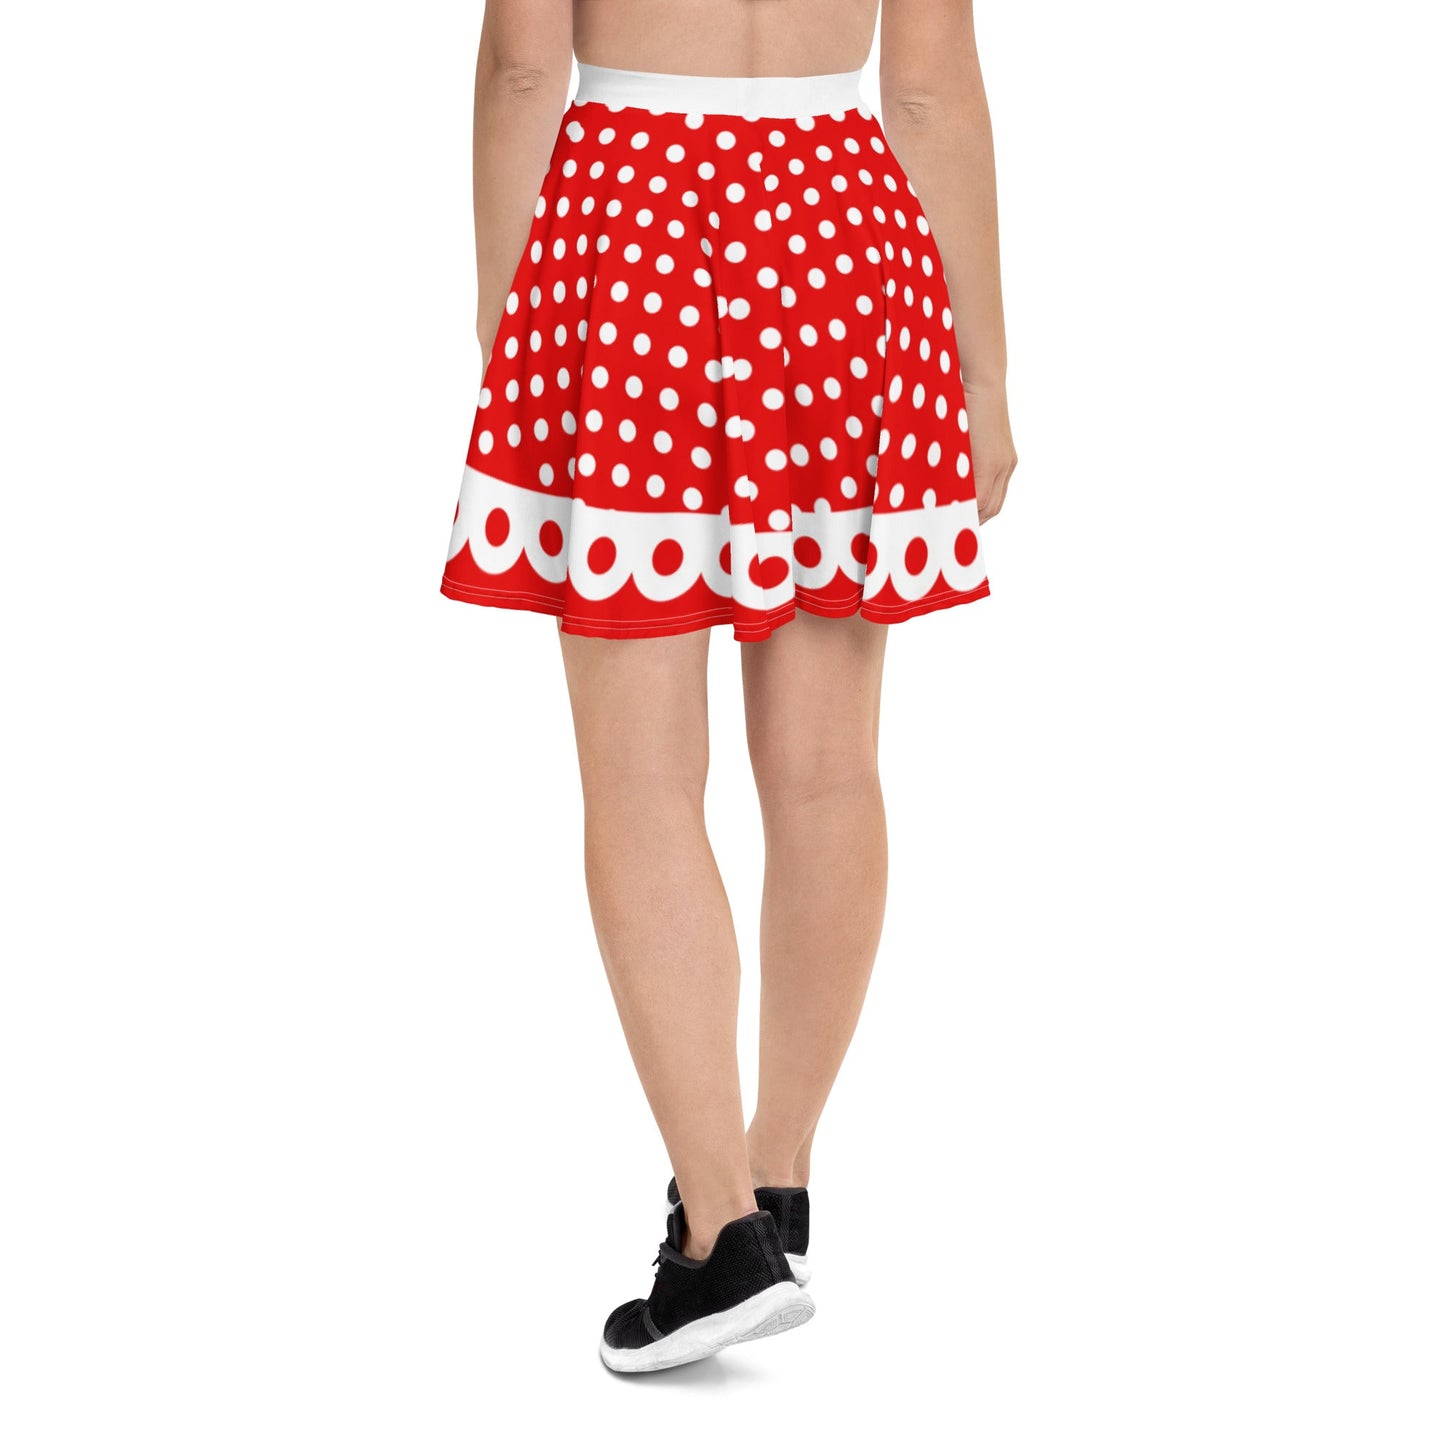 Mrs. Mouse Skater Skirt 100 years of wonderdisney costumedisney family styles#tag4##tag5##tag6#